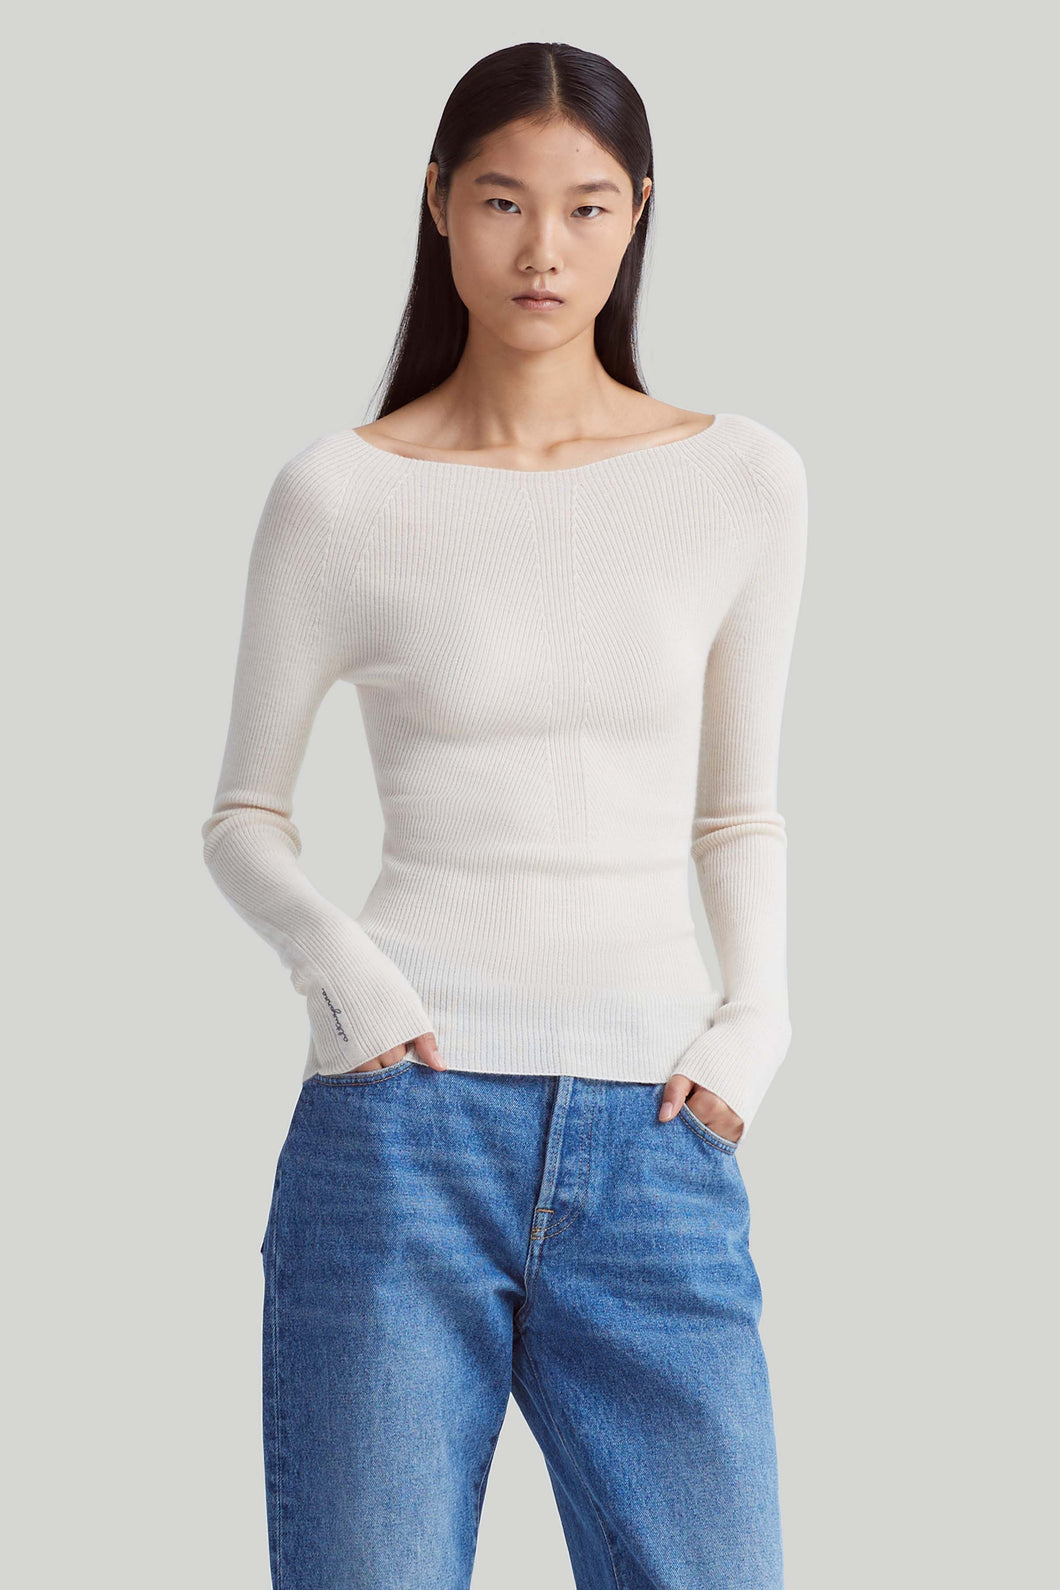 'Lee' Sweater